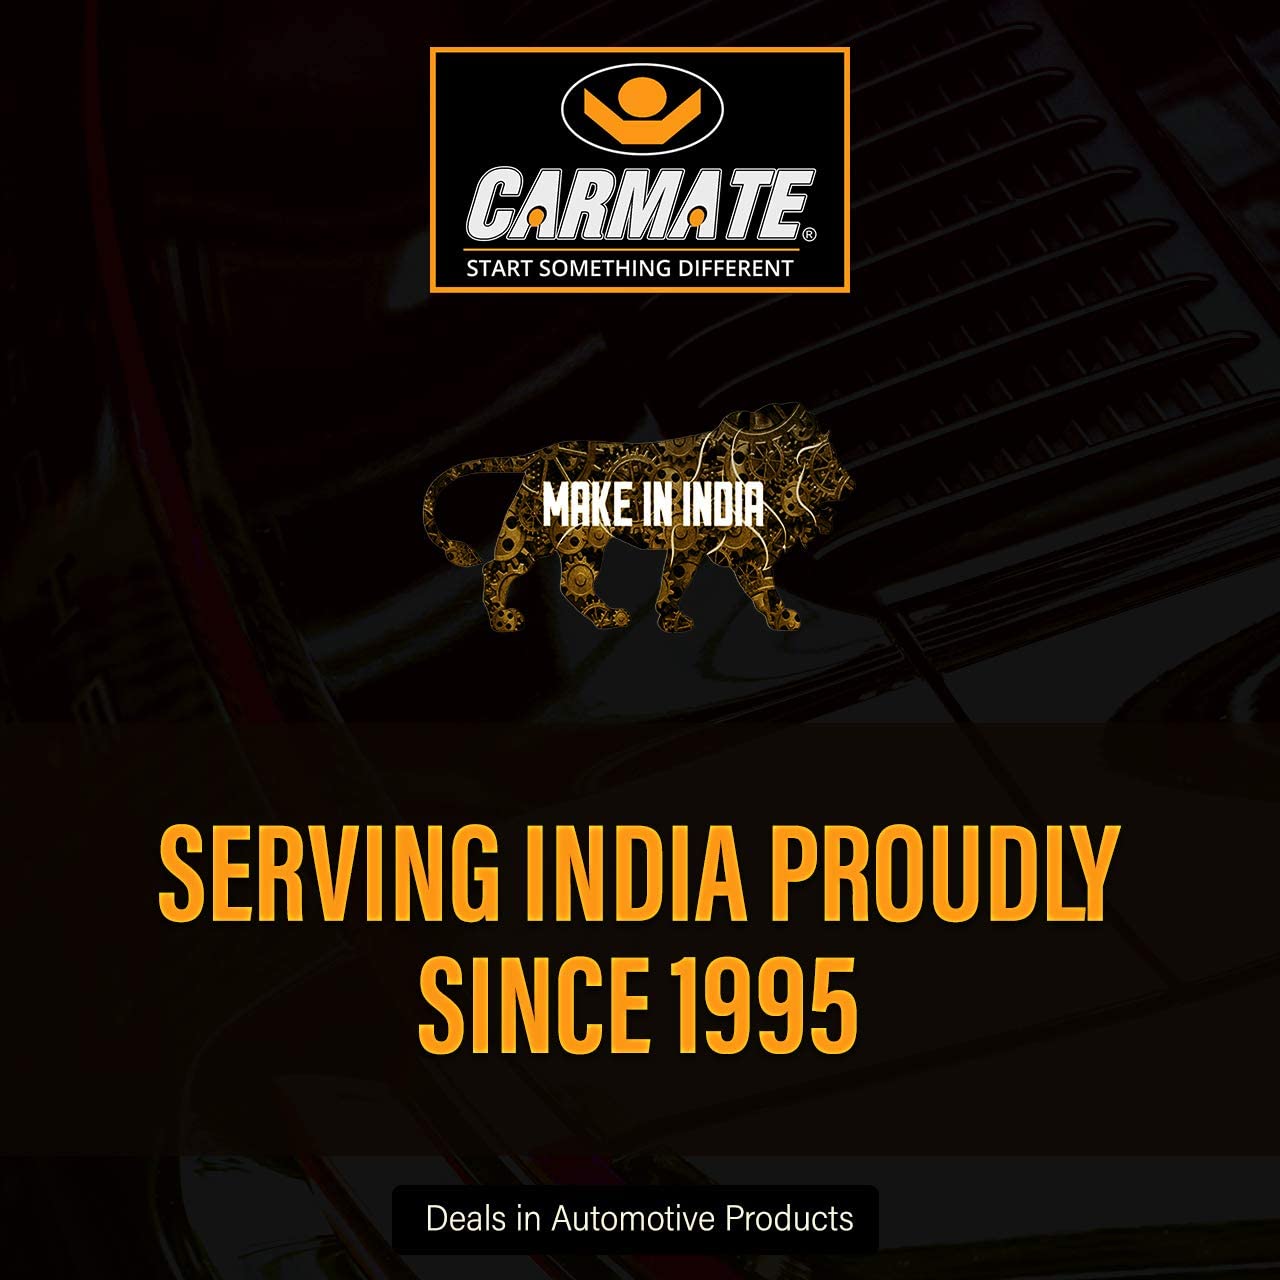 Carmate ECO Car Body Cover (Grey) for Maruti - Esteem - CARMATE®